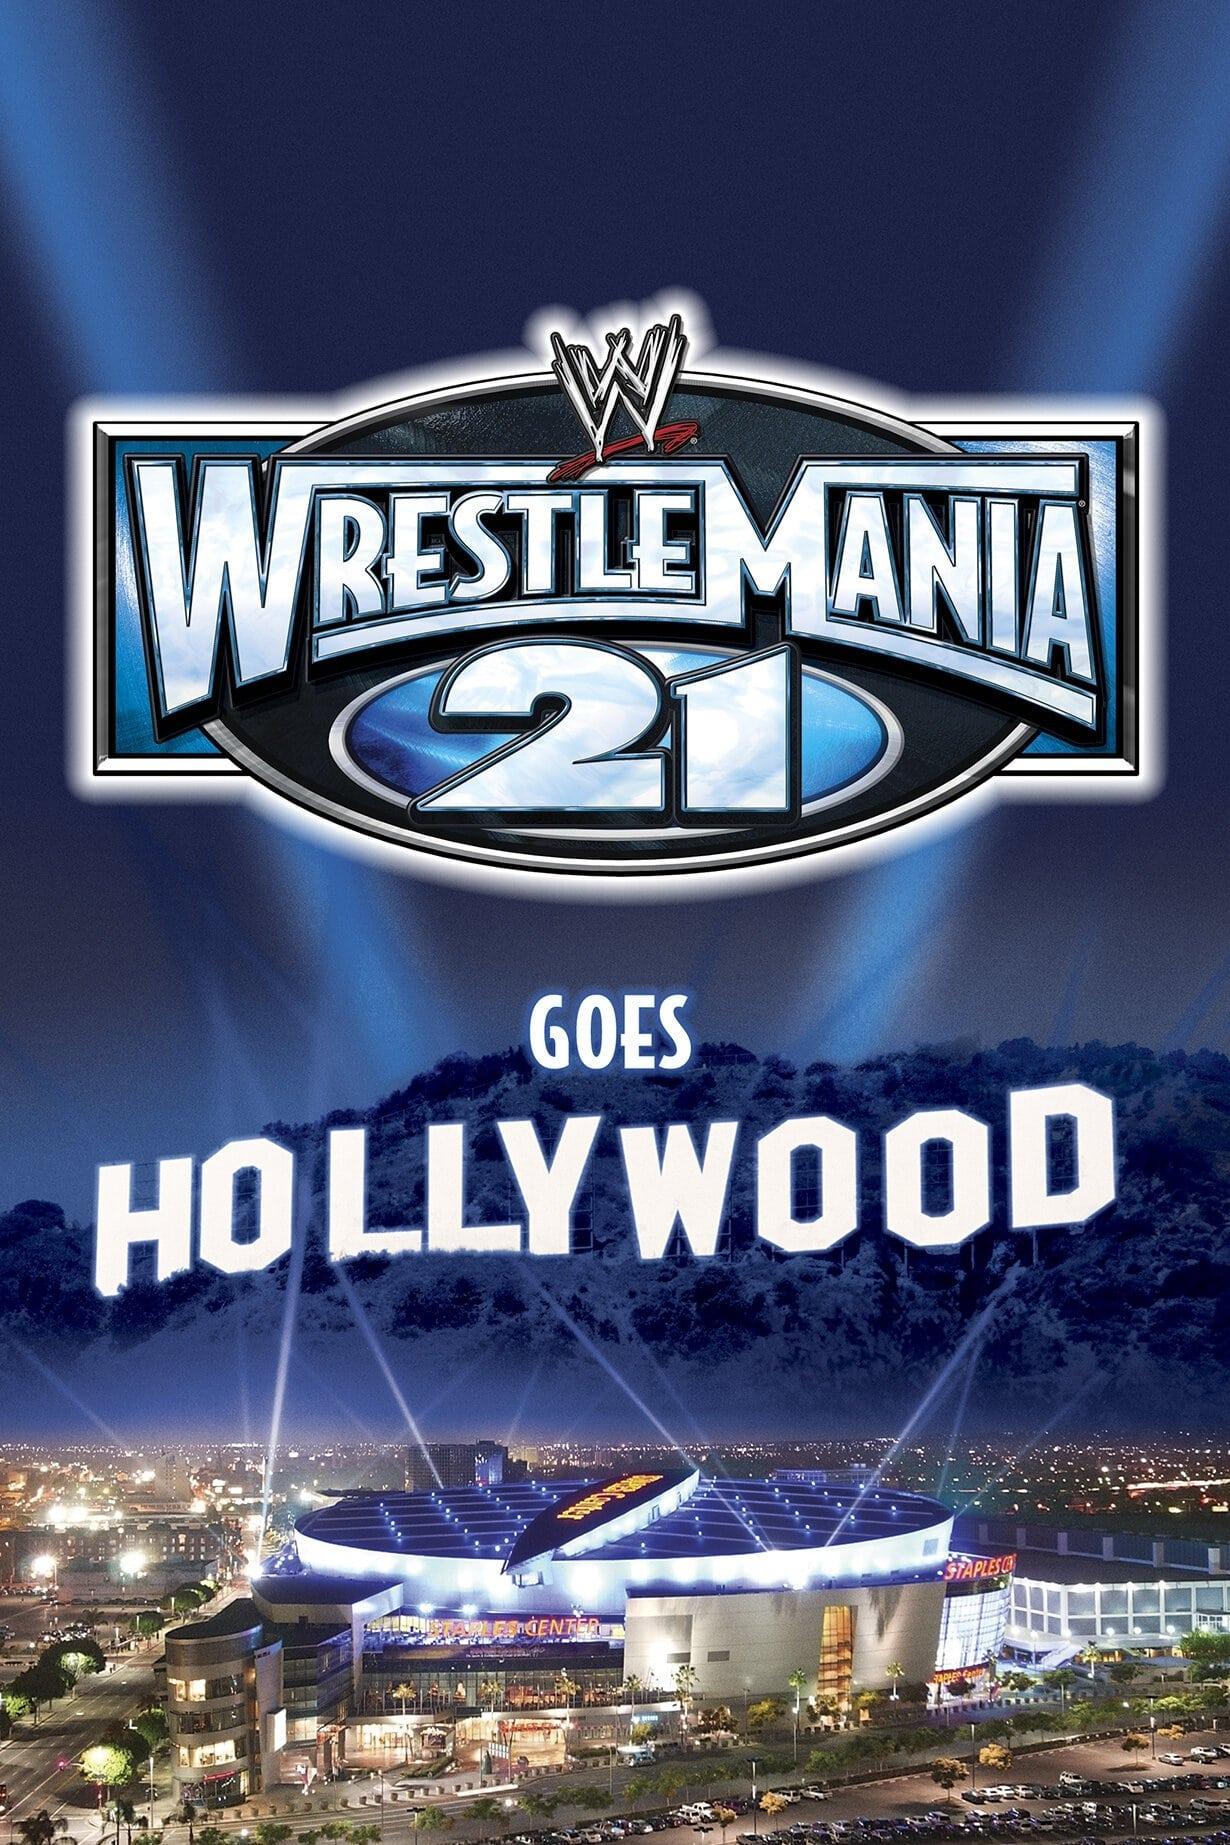 WWE WrestleMania 21 poster